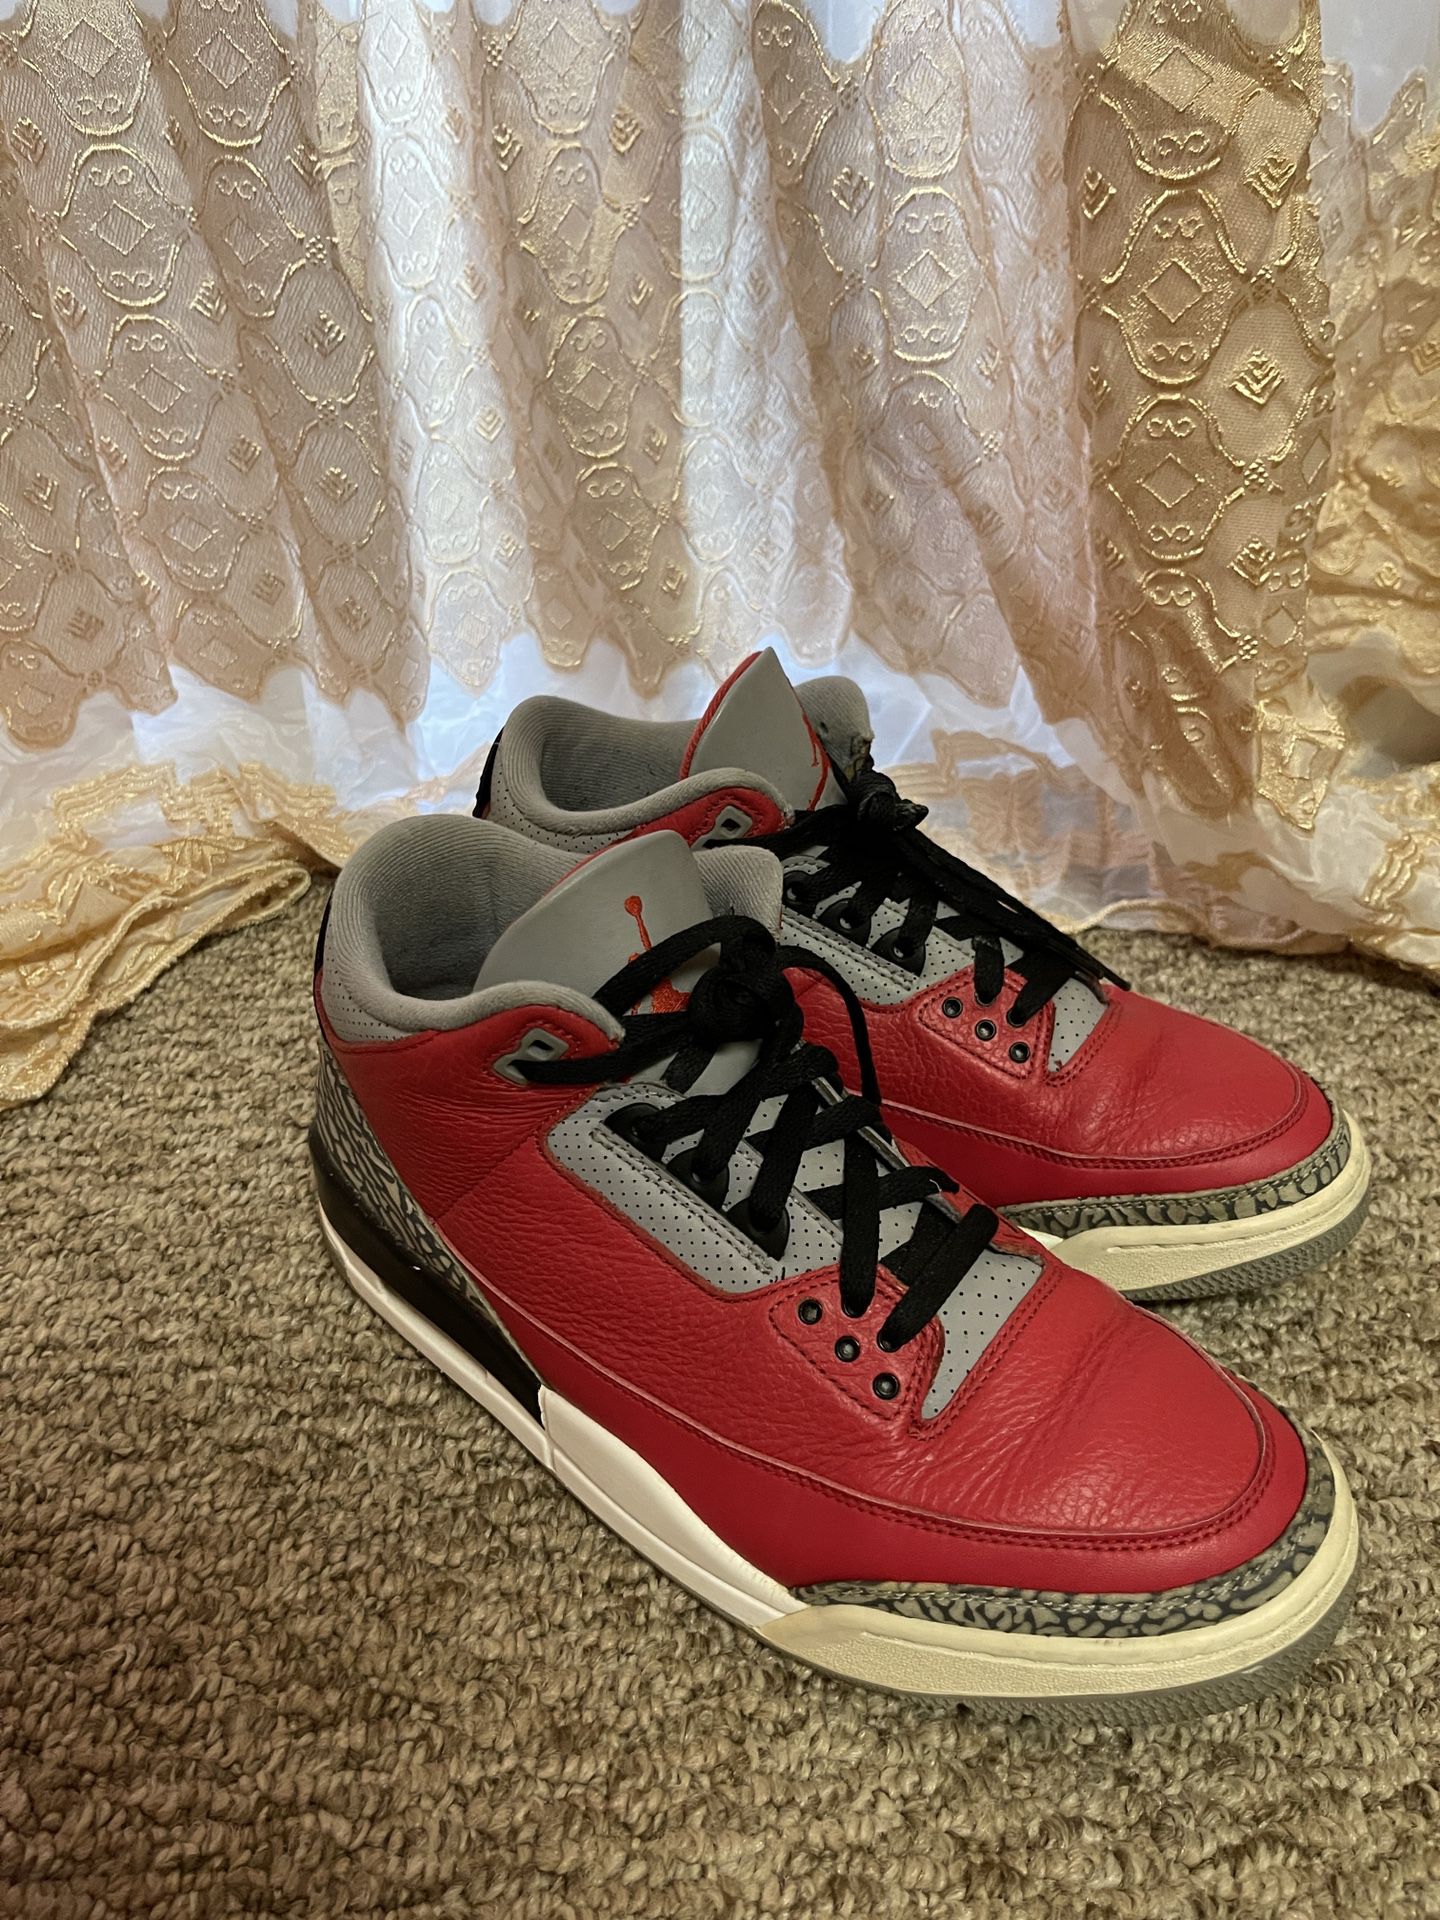 Jordan 3 Red Cement (Size 10.5)